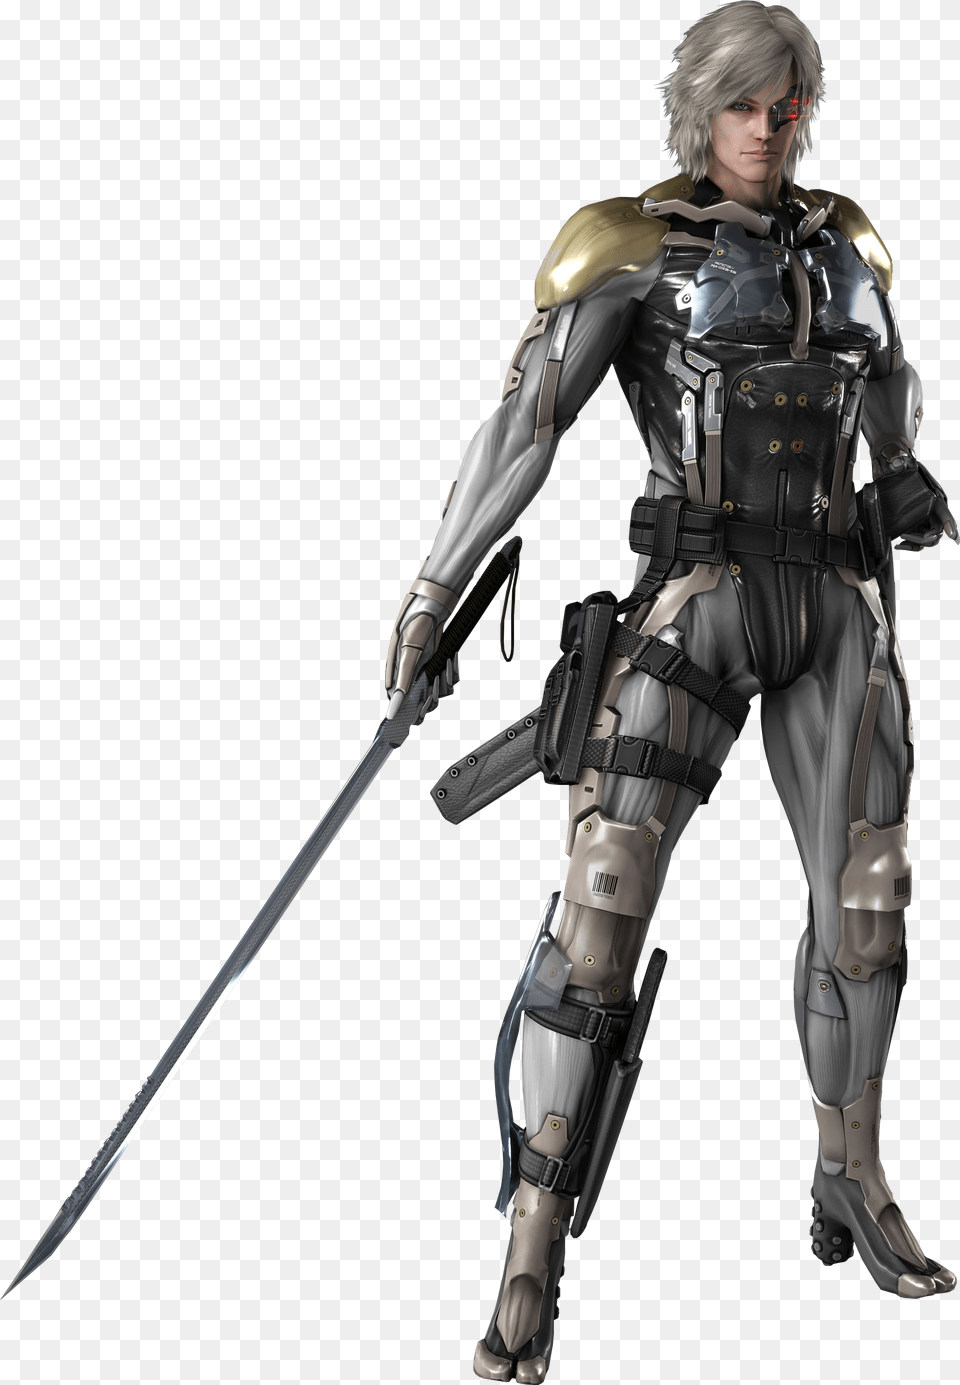 Metal Gear Rising Revengeance Raiden Render By American Metal Gear Rising Revengeance Raiden Skins, Weapon, Sword, Person, Man Png